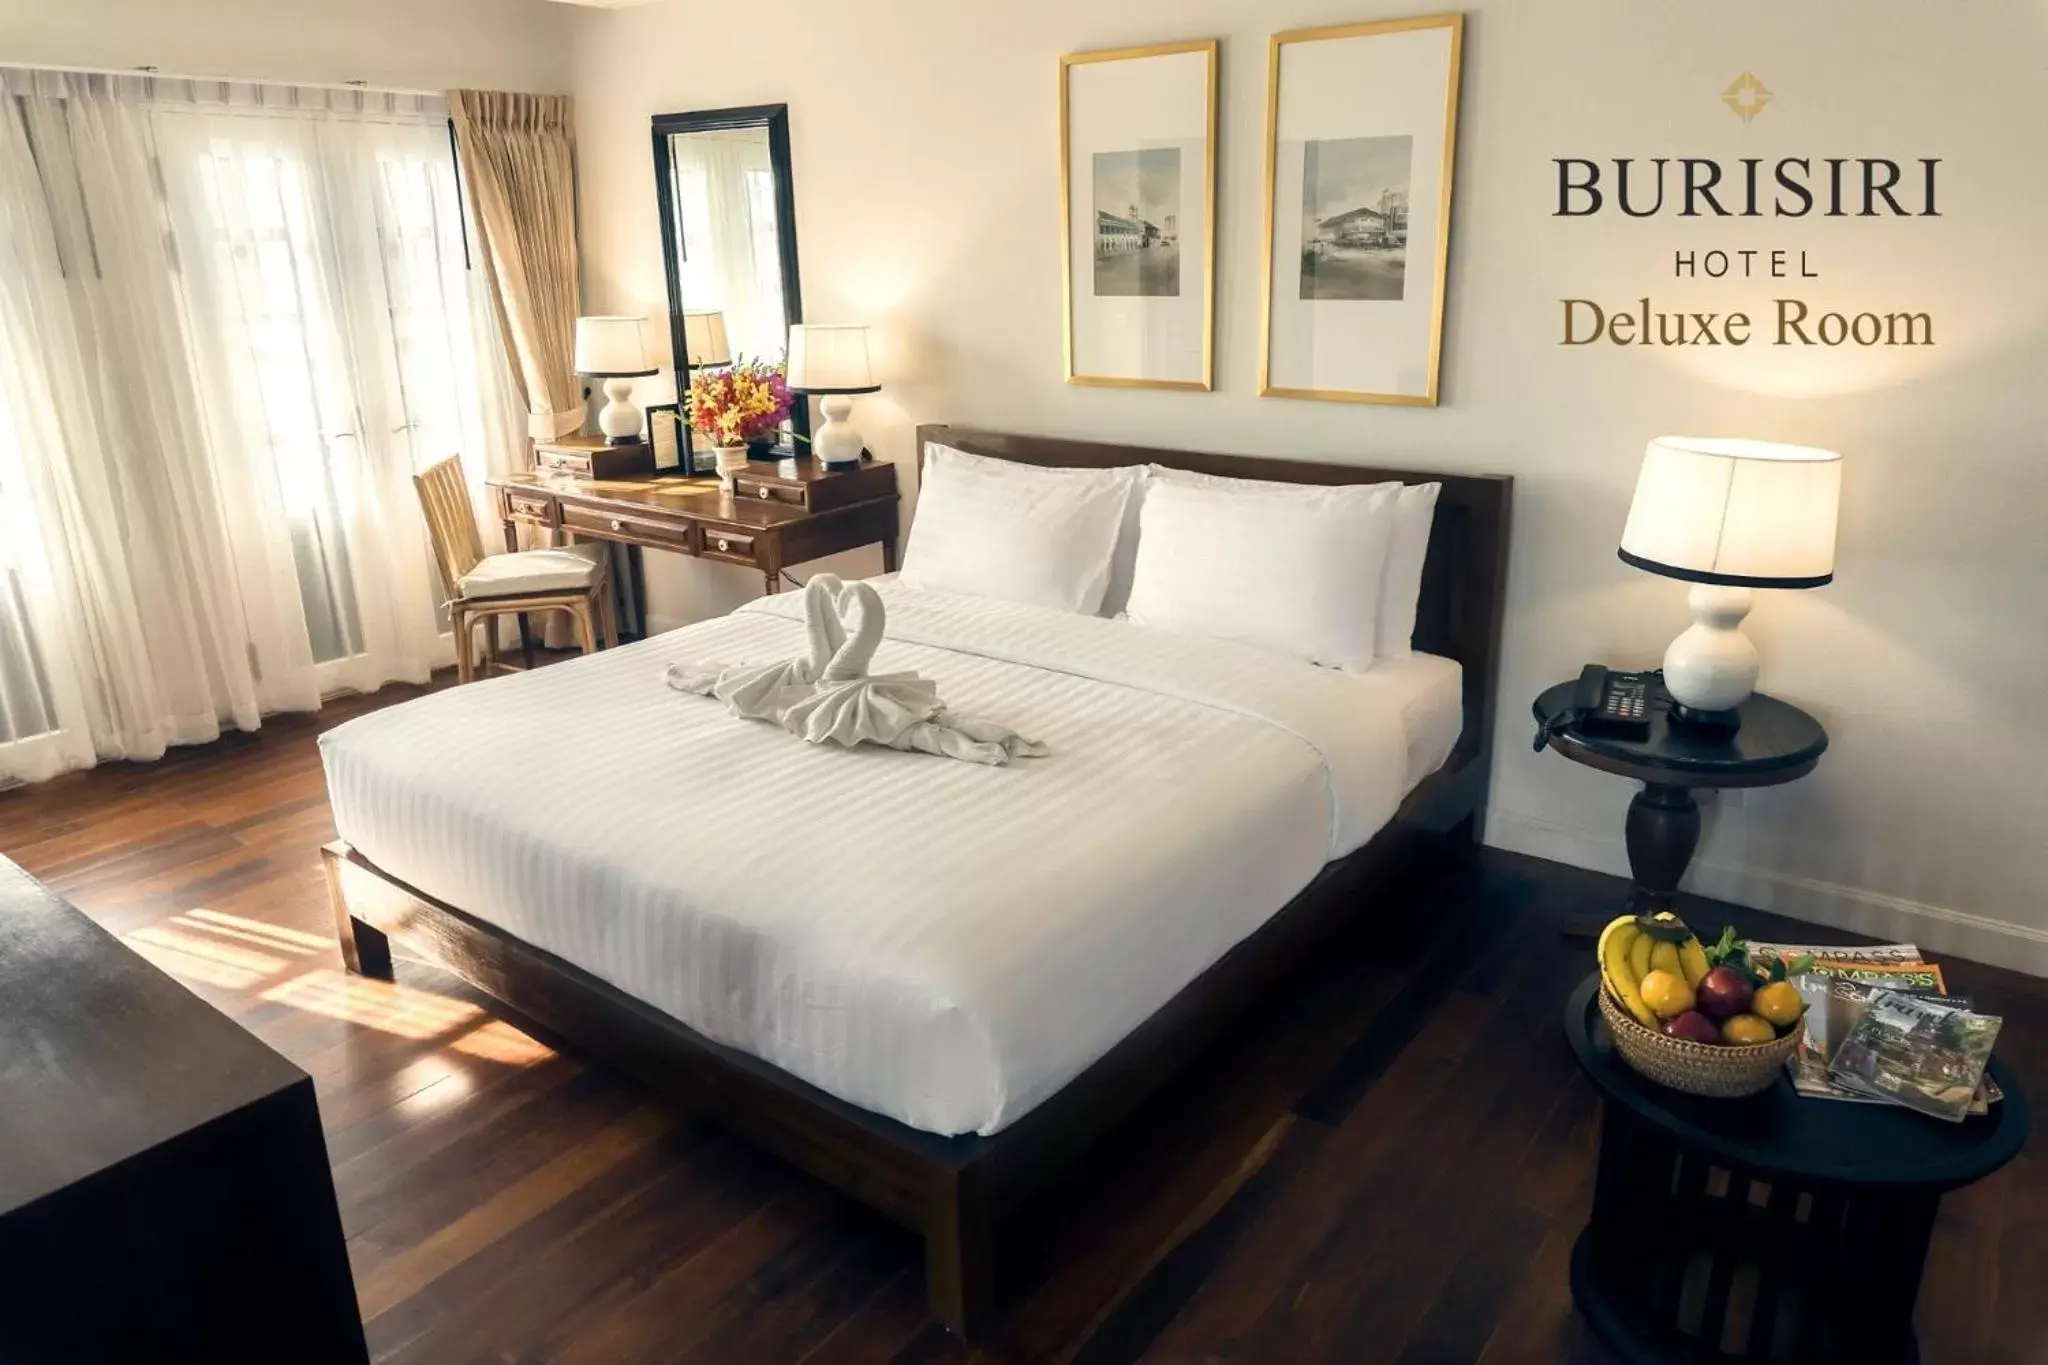 Bed in Buri Siri Boutique Hotel